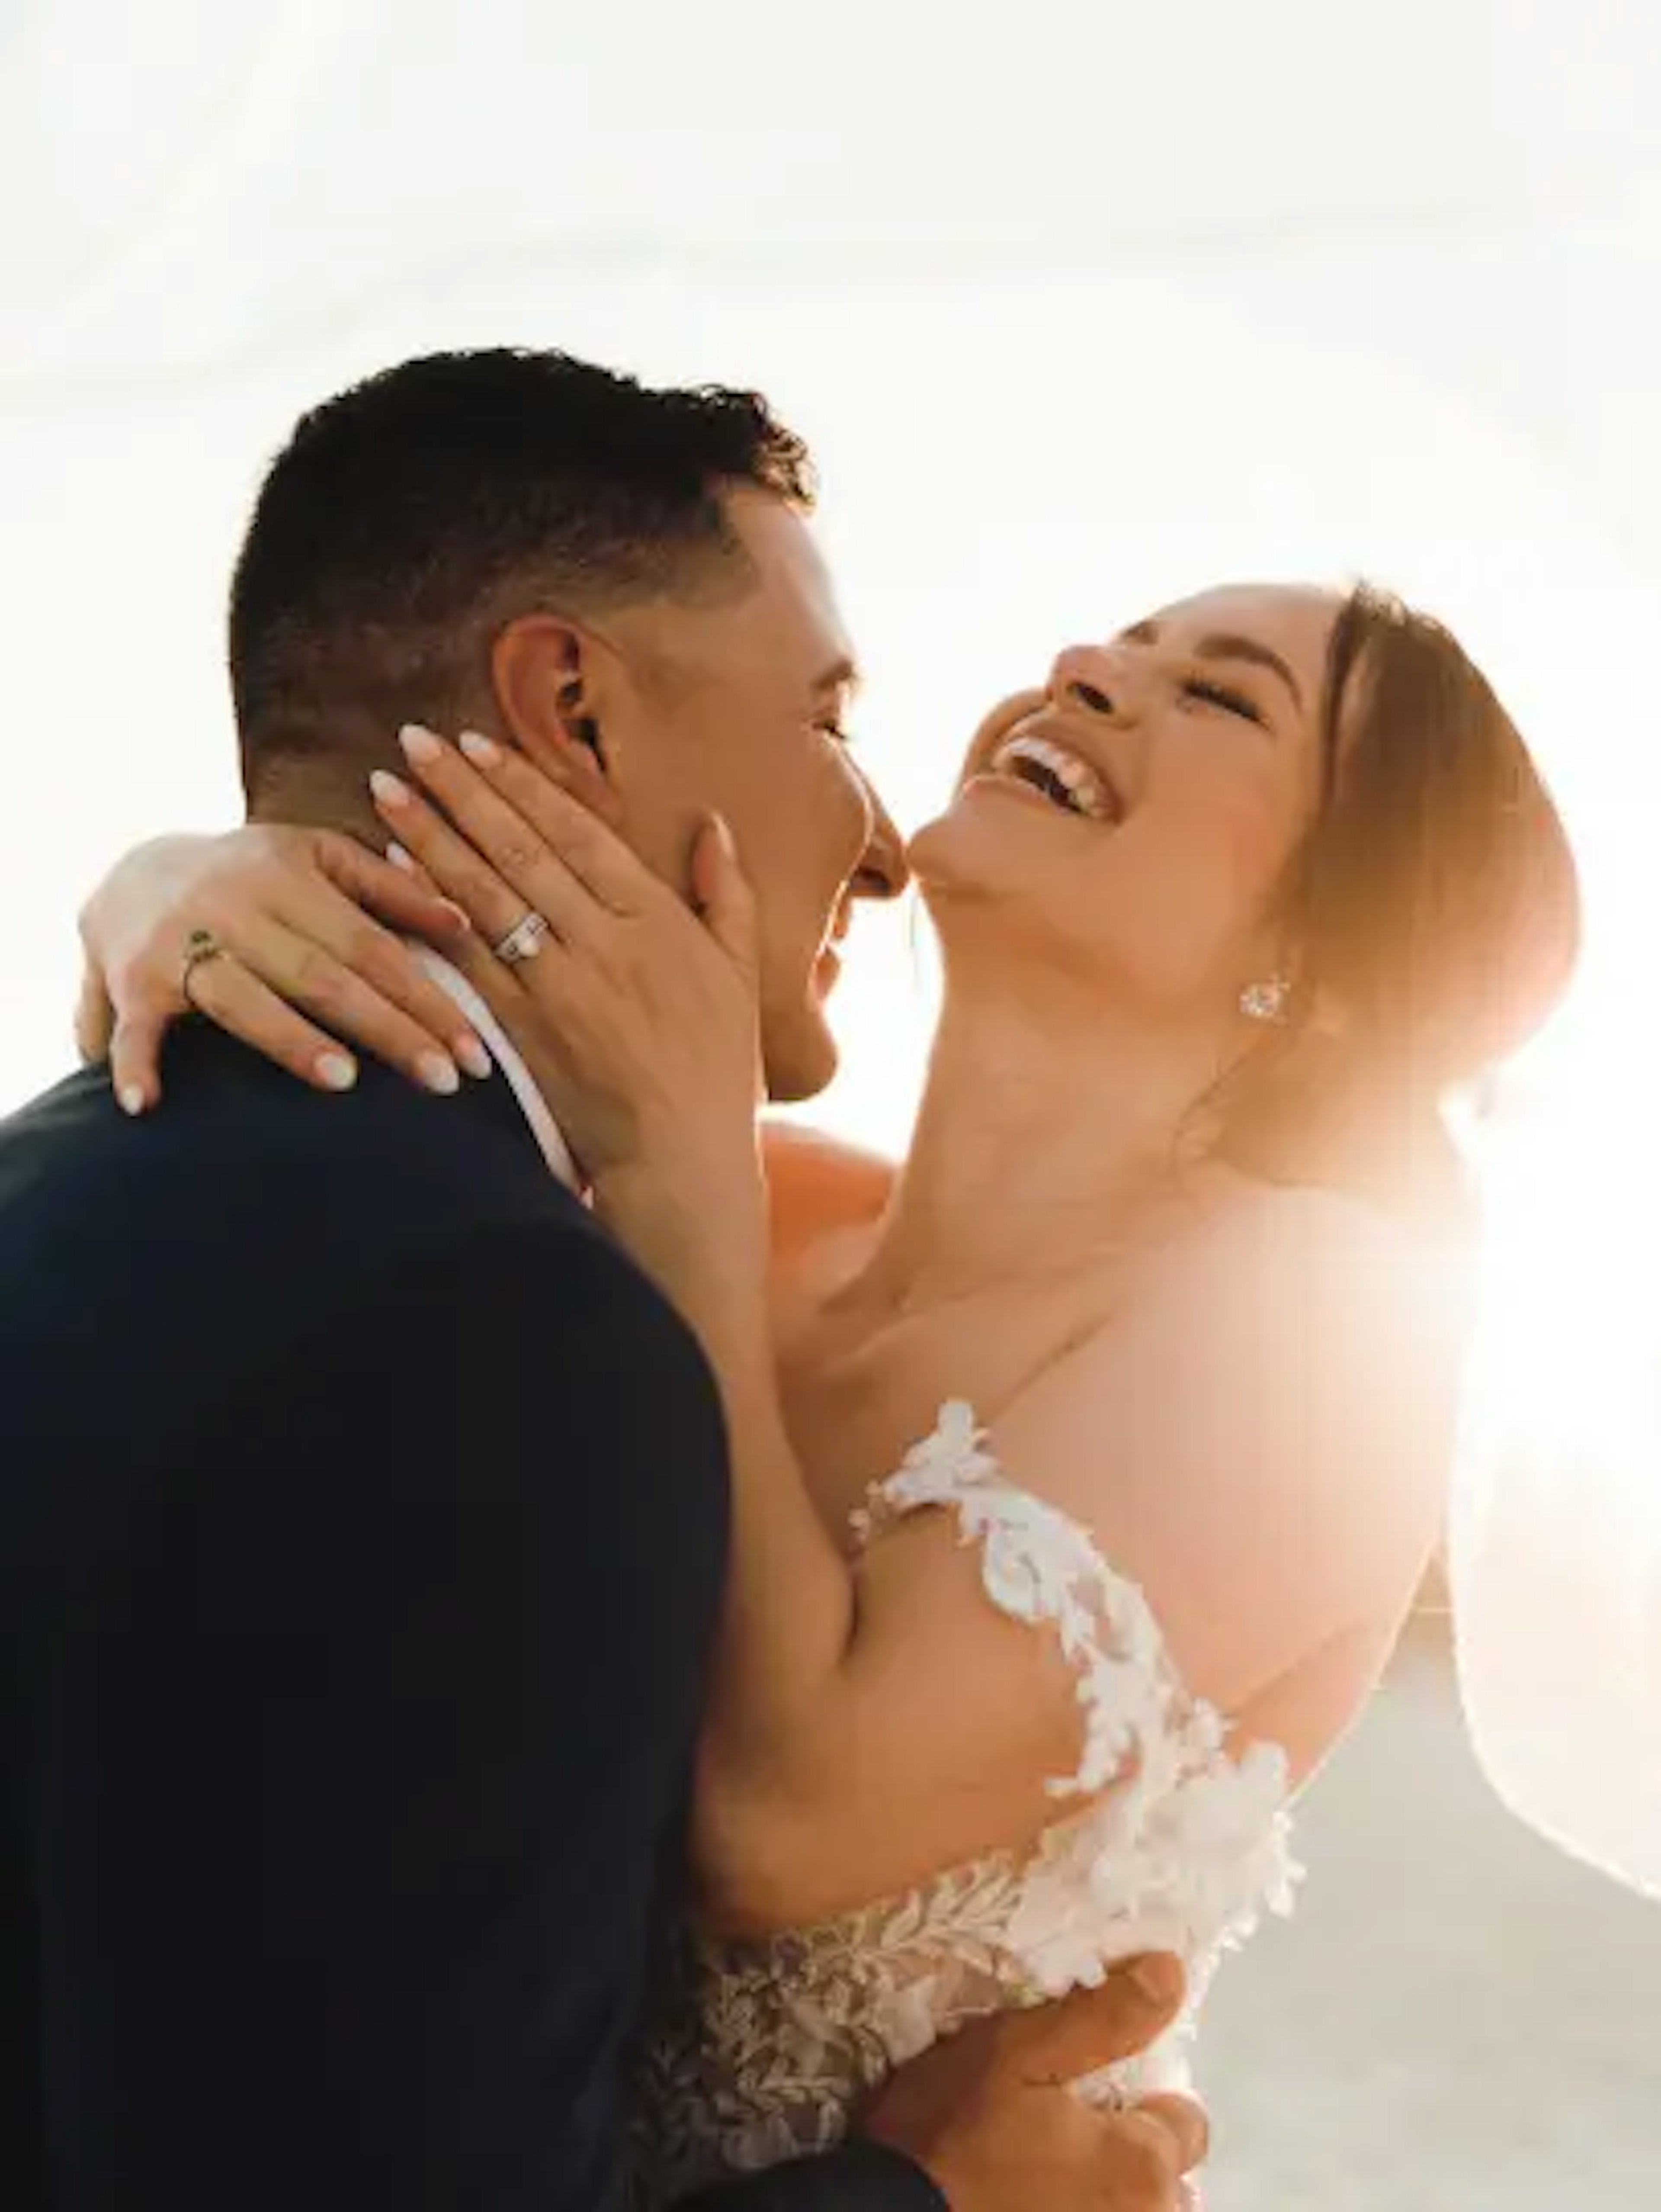 Newlywed couple sharing a joyful embrace on their wedding day in Riviera Maya